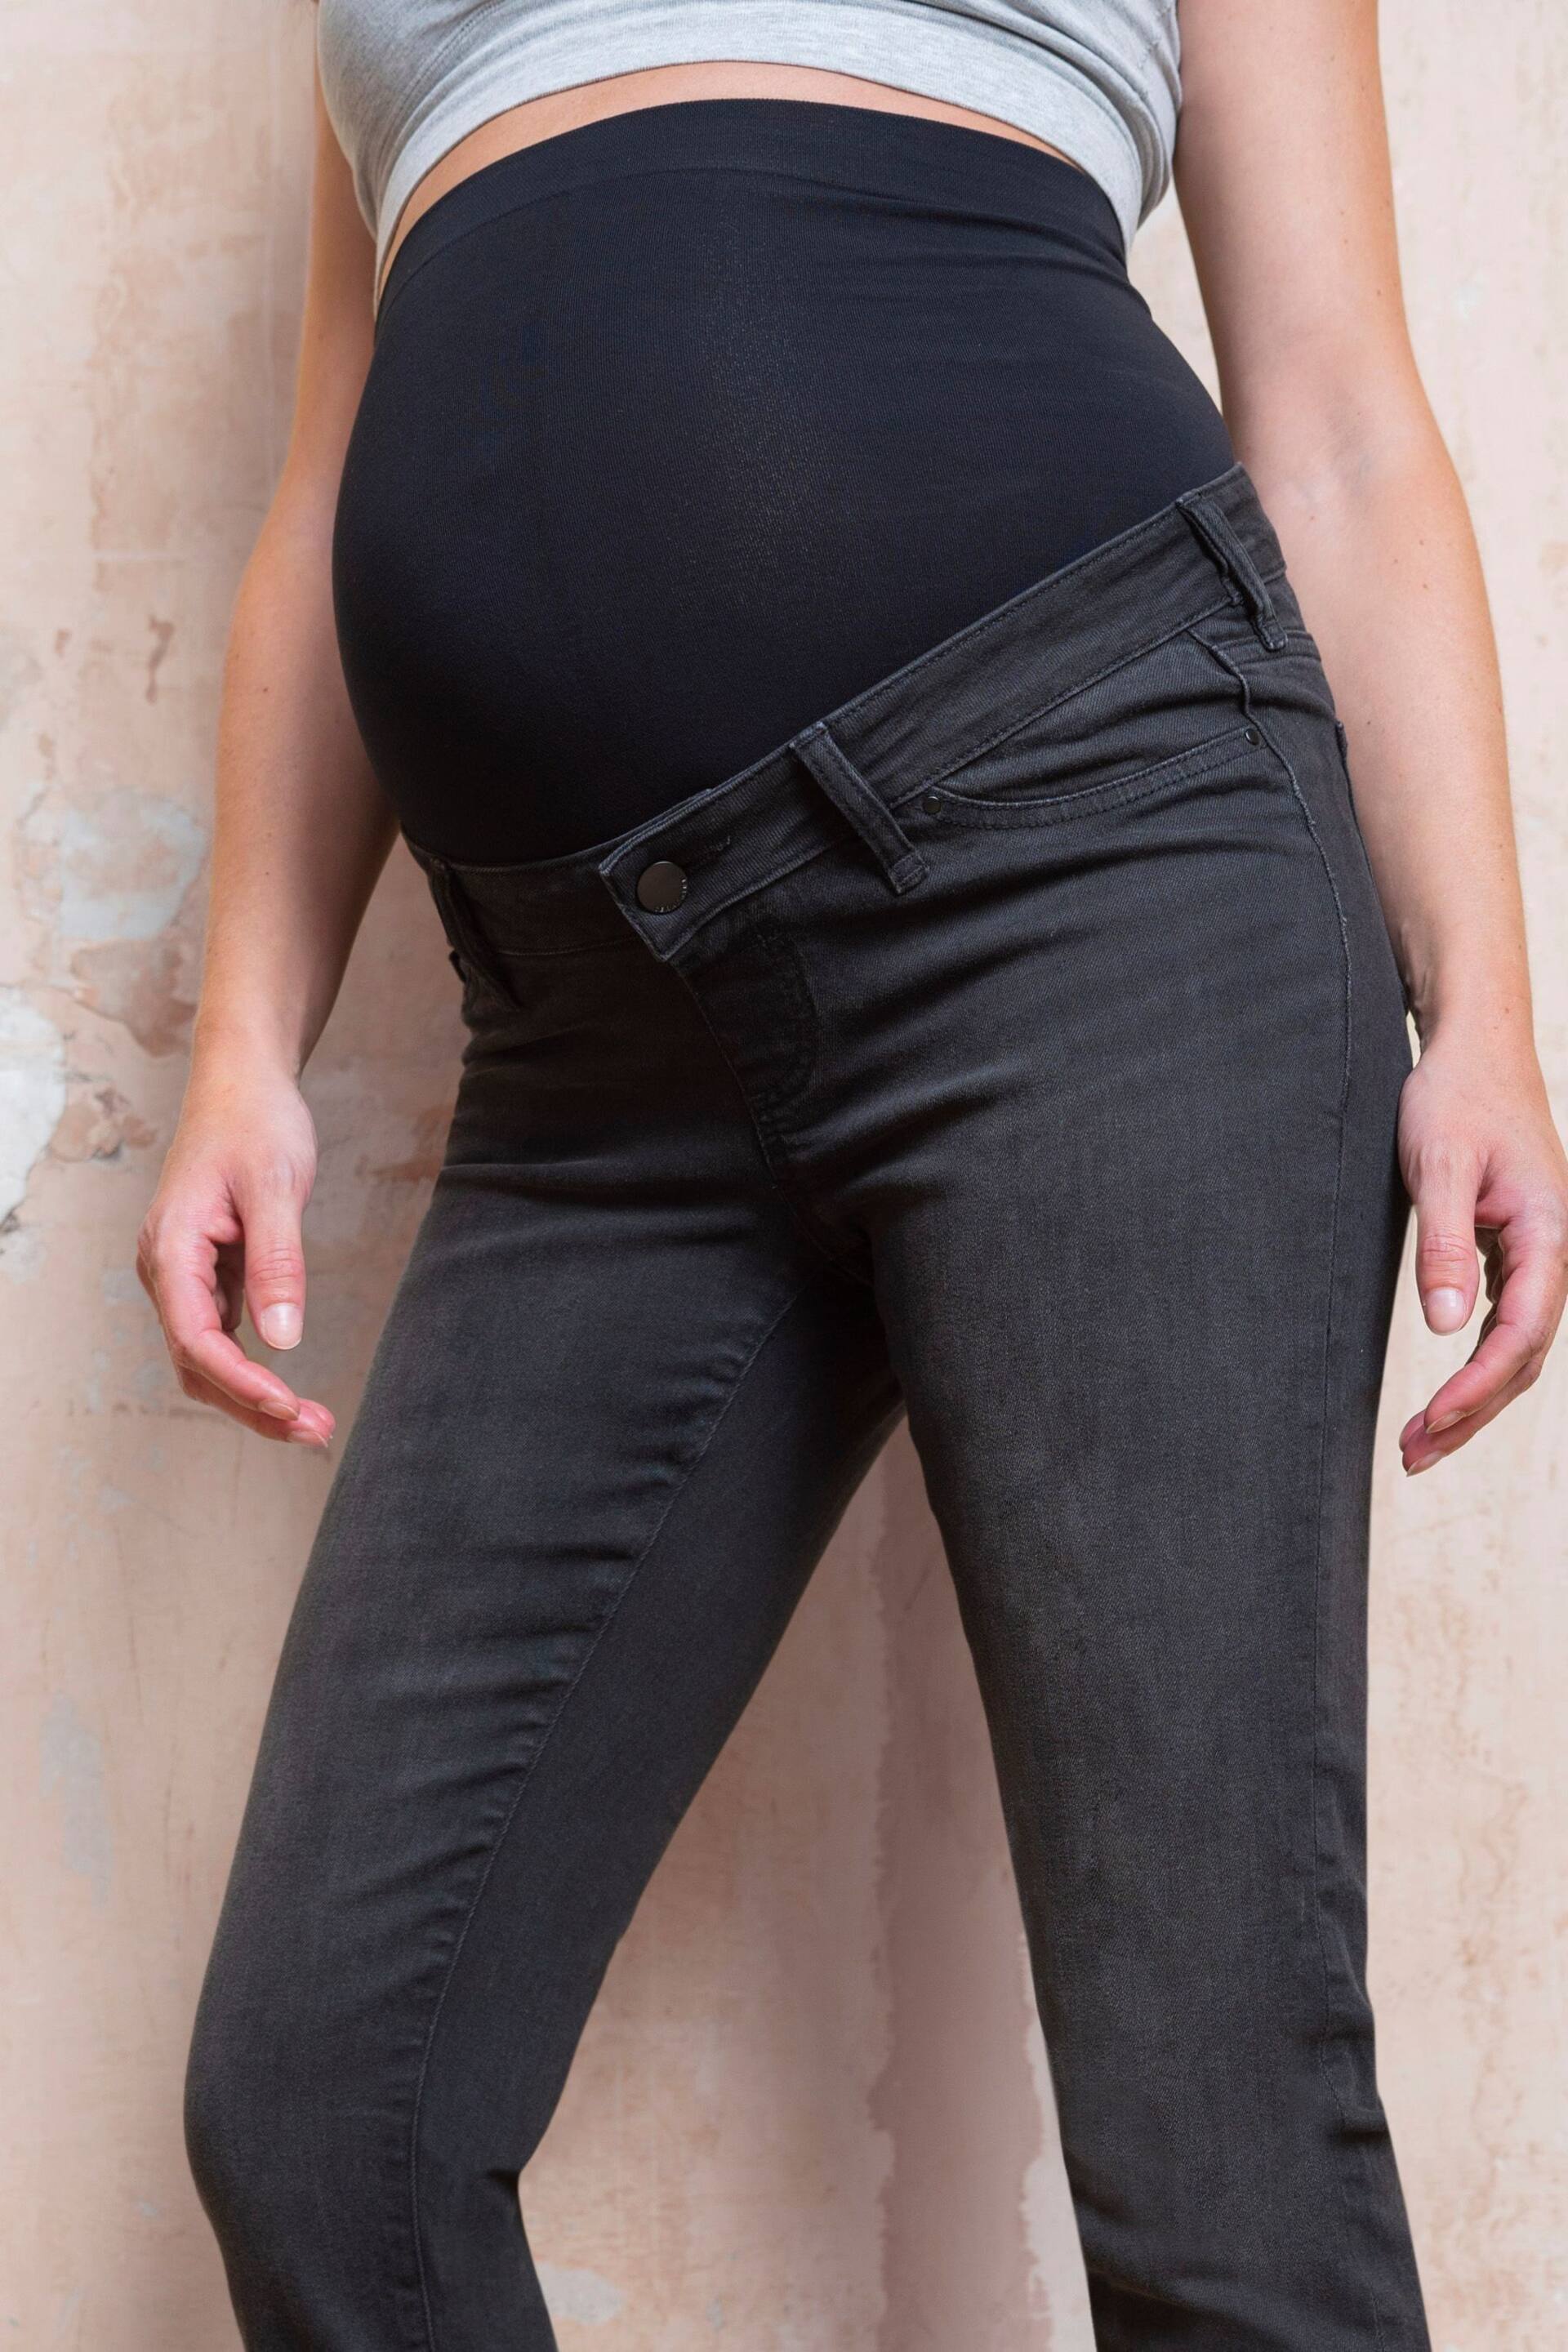 Seraphine Luca-slim Leg Black Jeans - Image 7 of 8